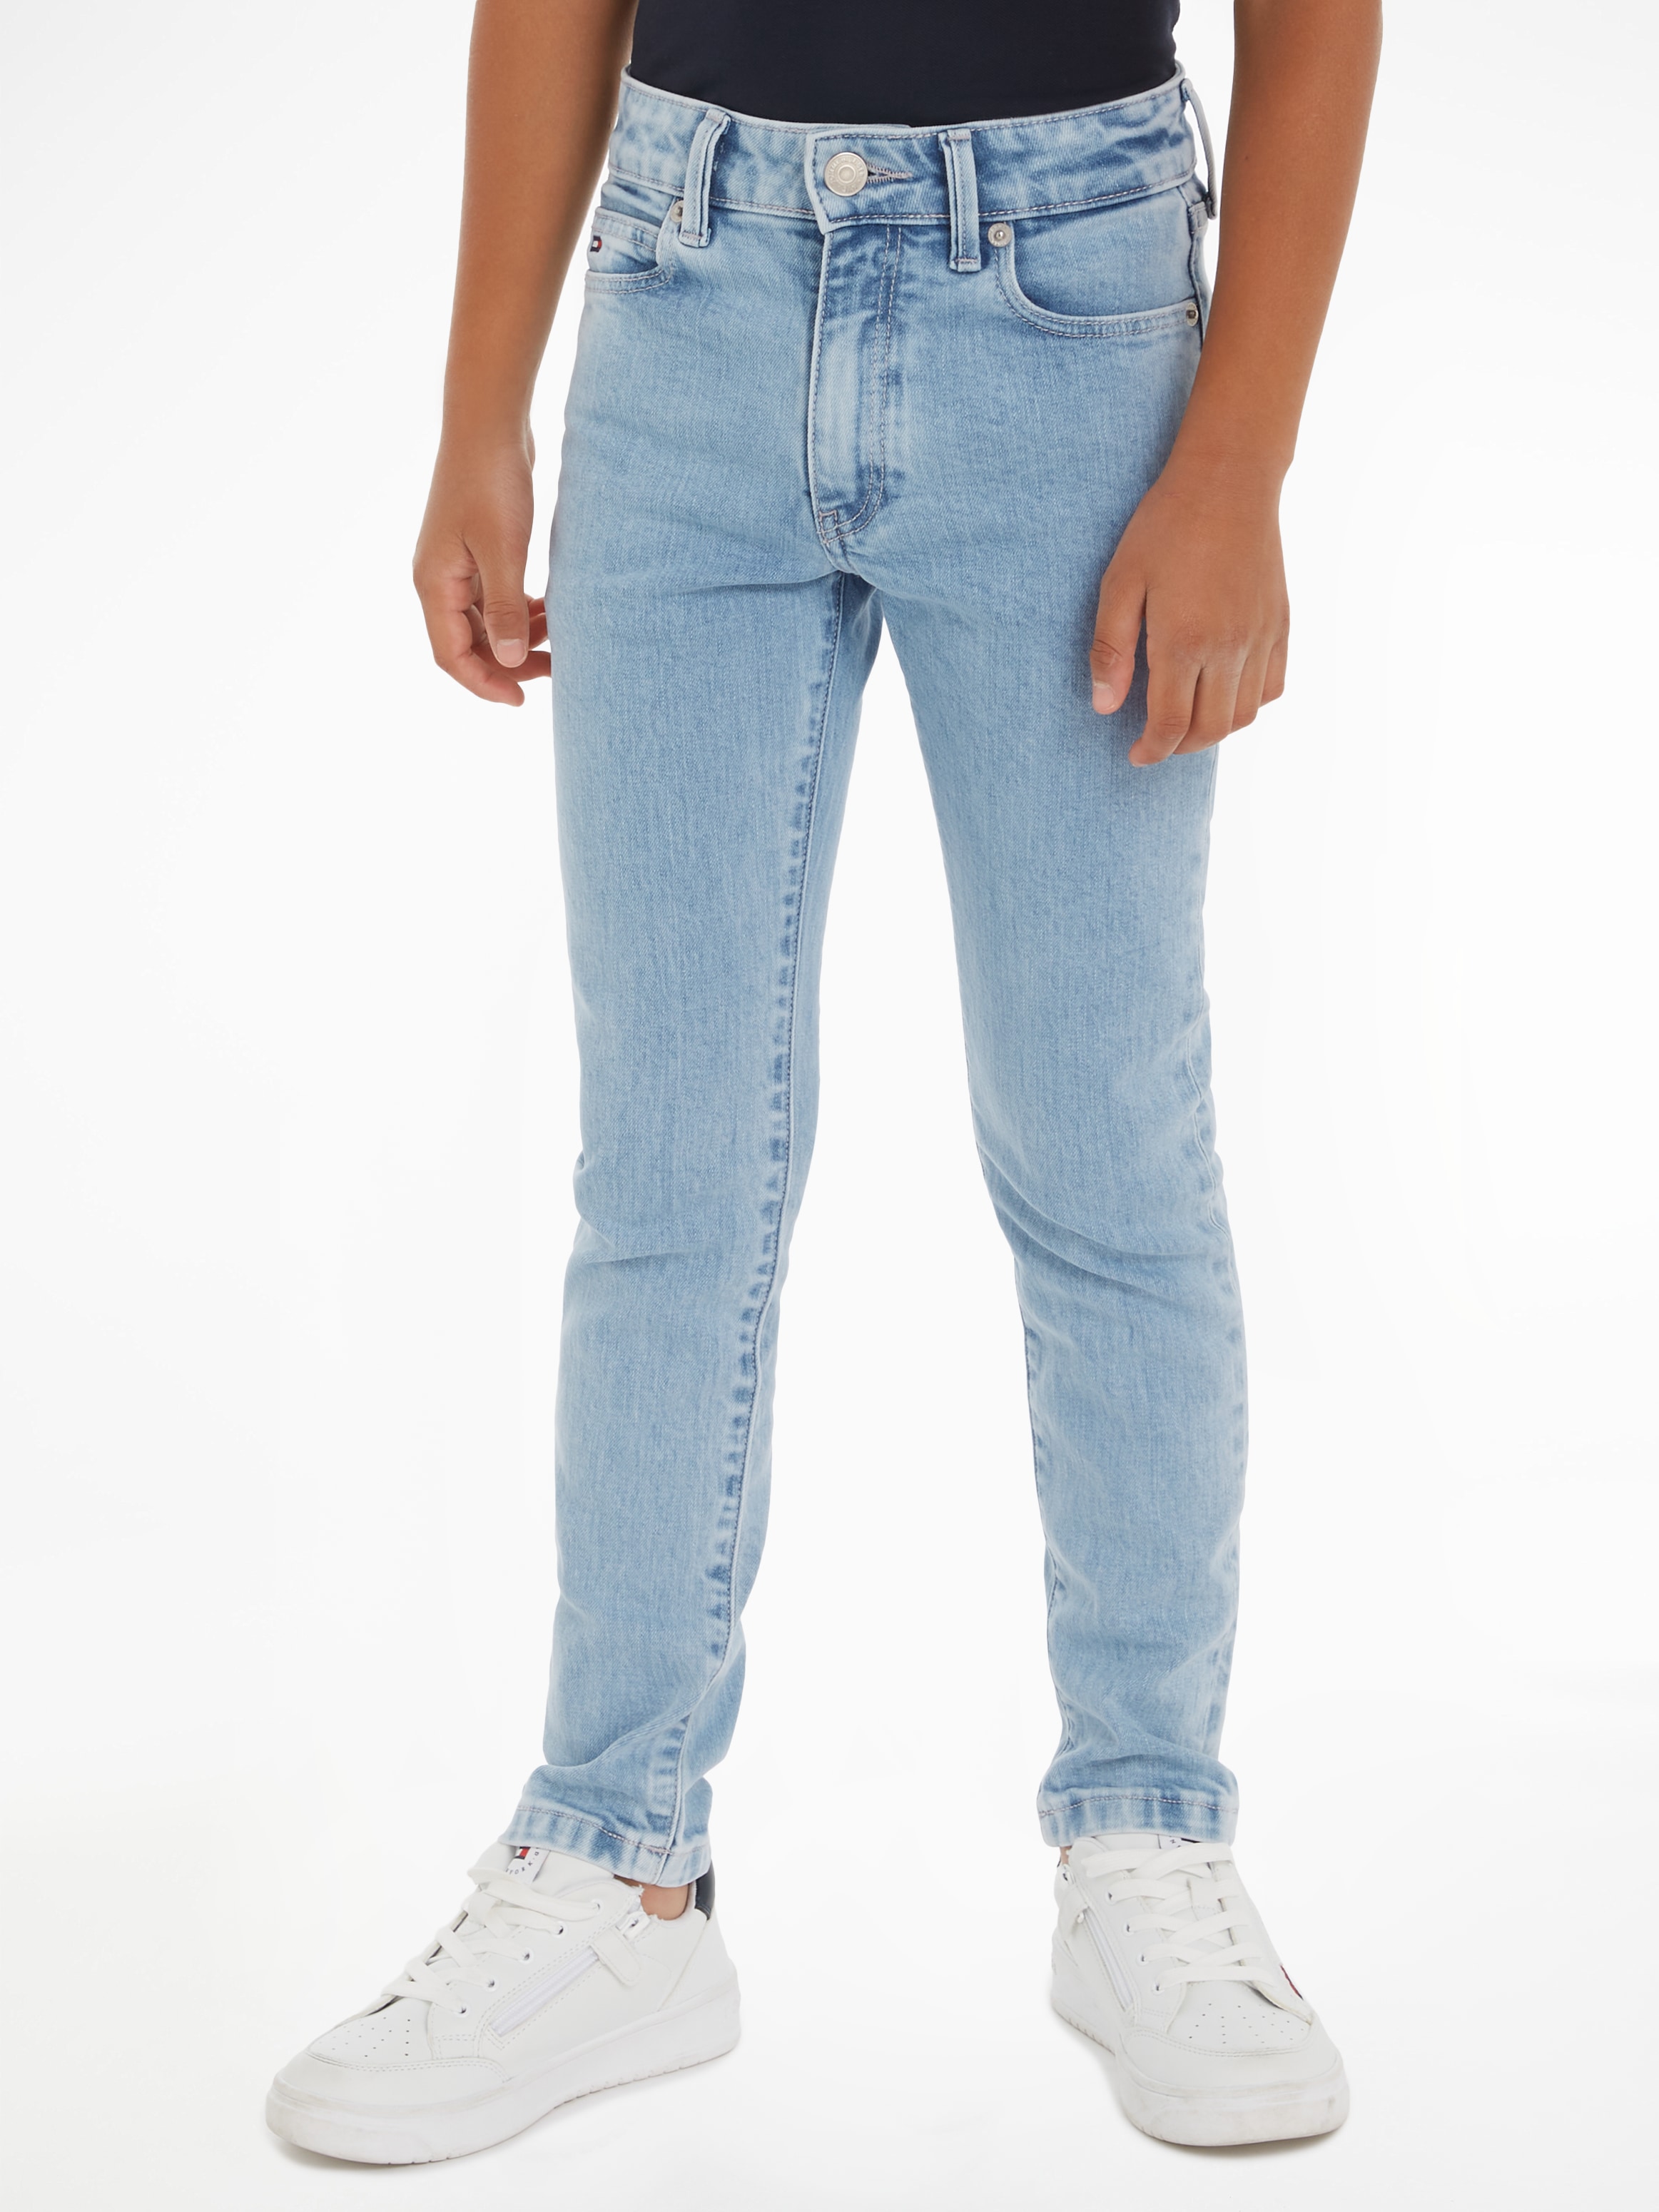 Tommy Hilfiger Straight-Jeans »MODERN STRAIGHT SALT & PEPPER LT«, Kinder bis 16 Jahre